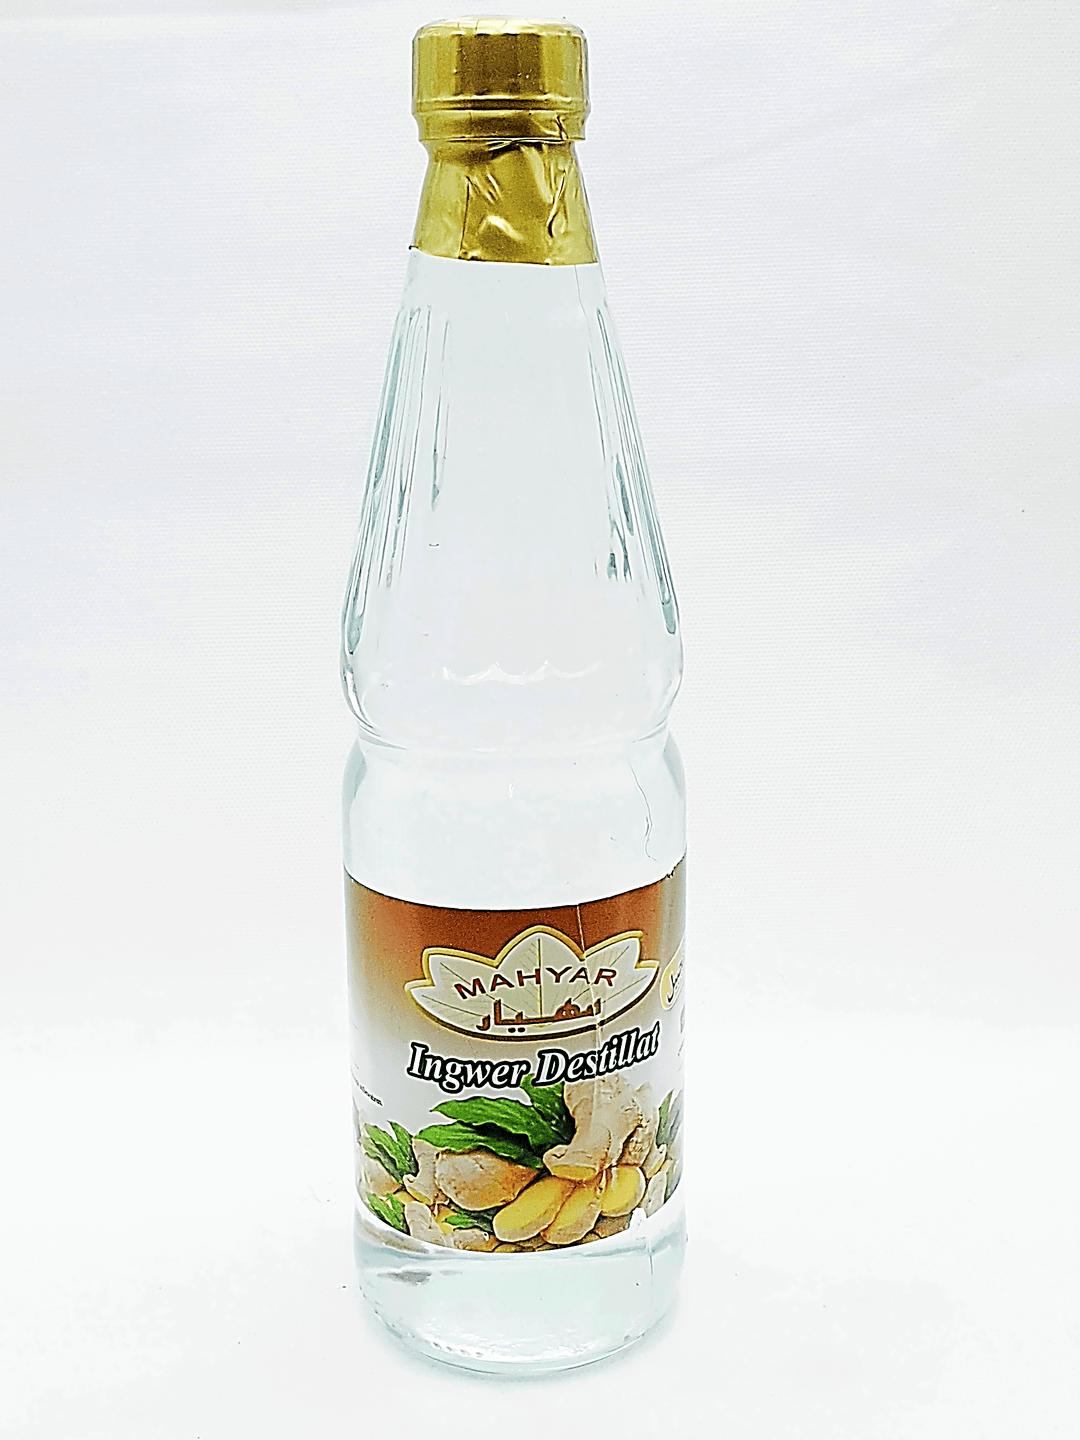 Mahyar Araghe Zanjebil - Ingwer Destillat 430ml - Persienmarkt